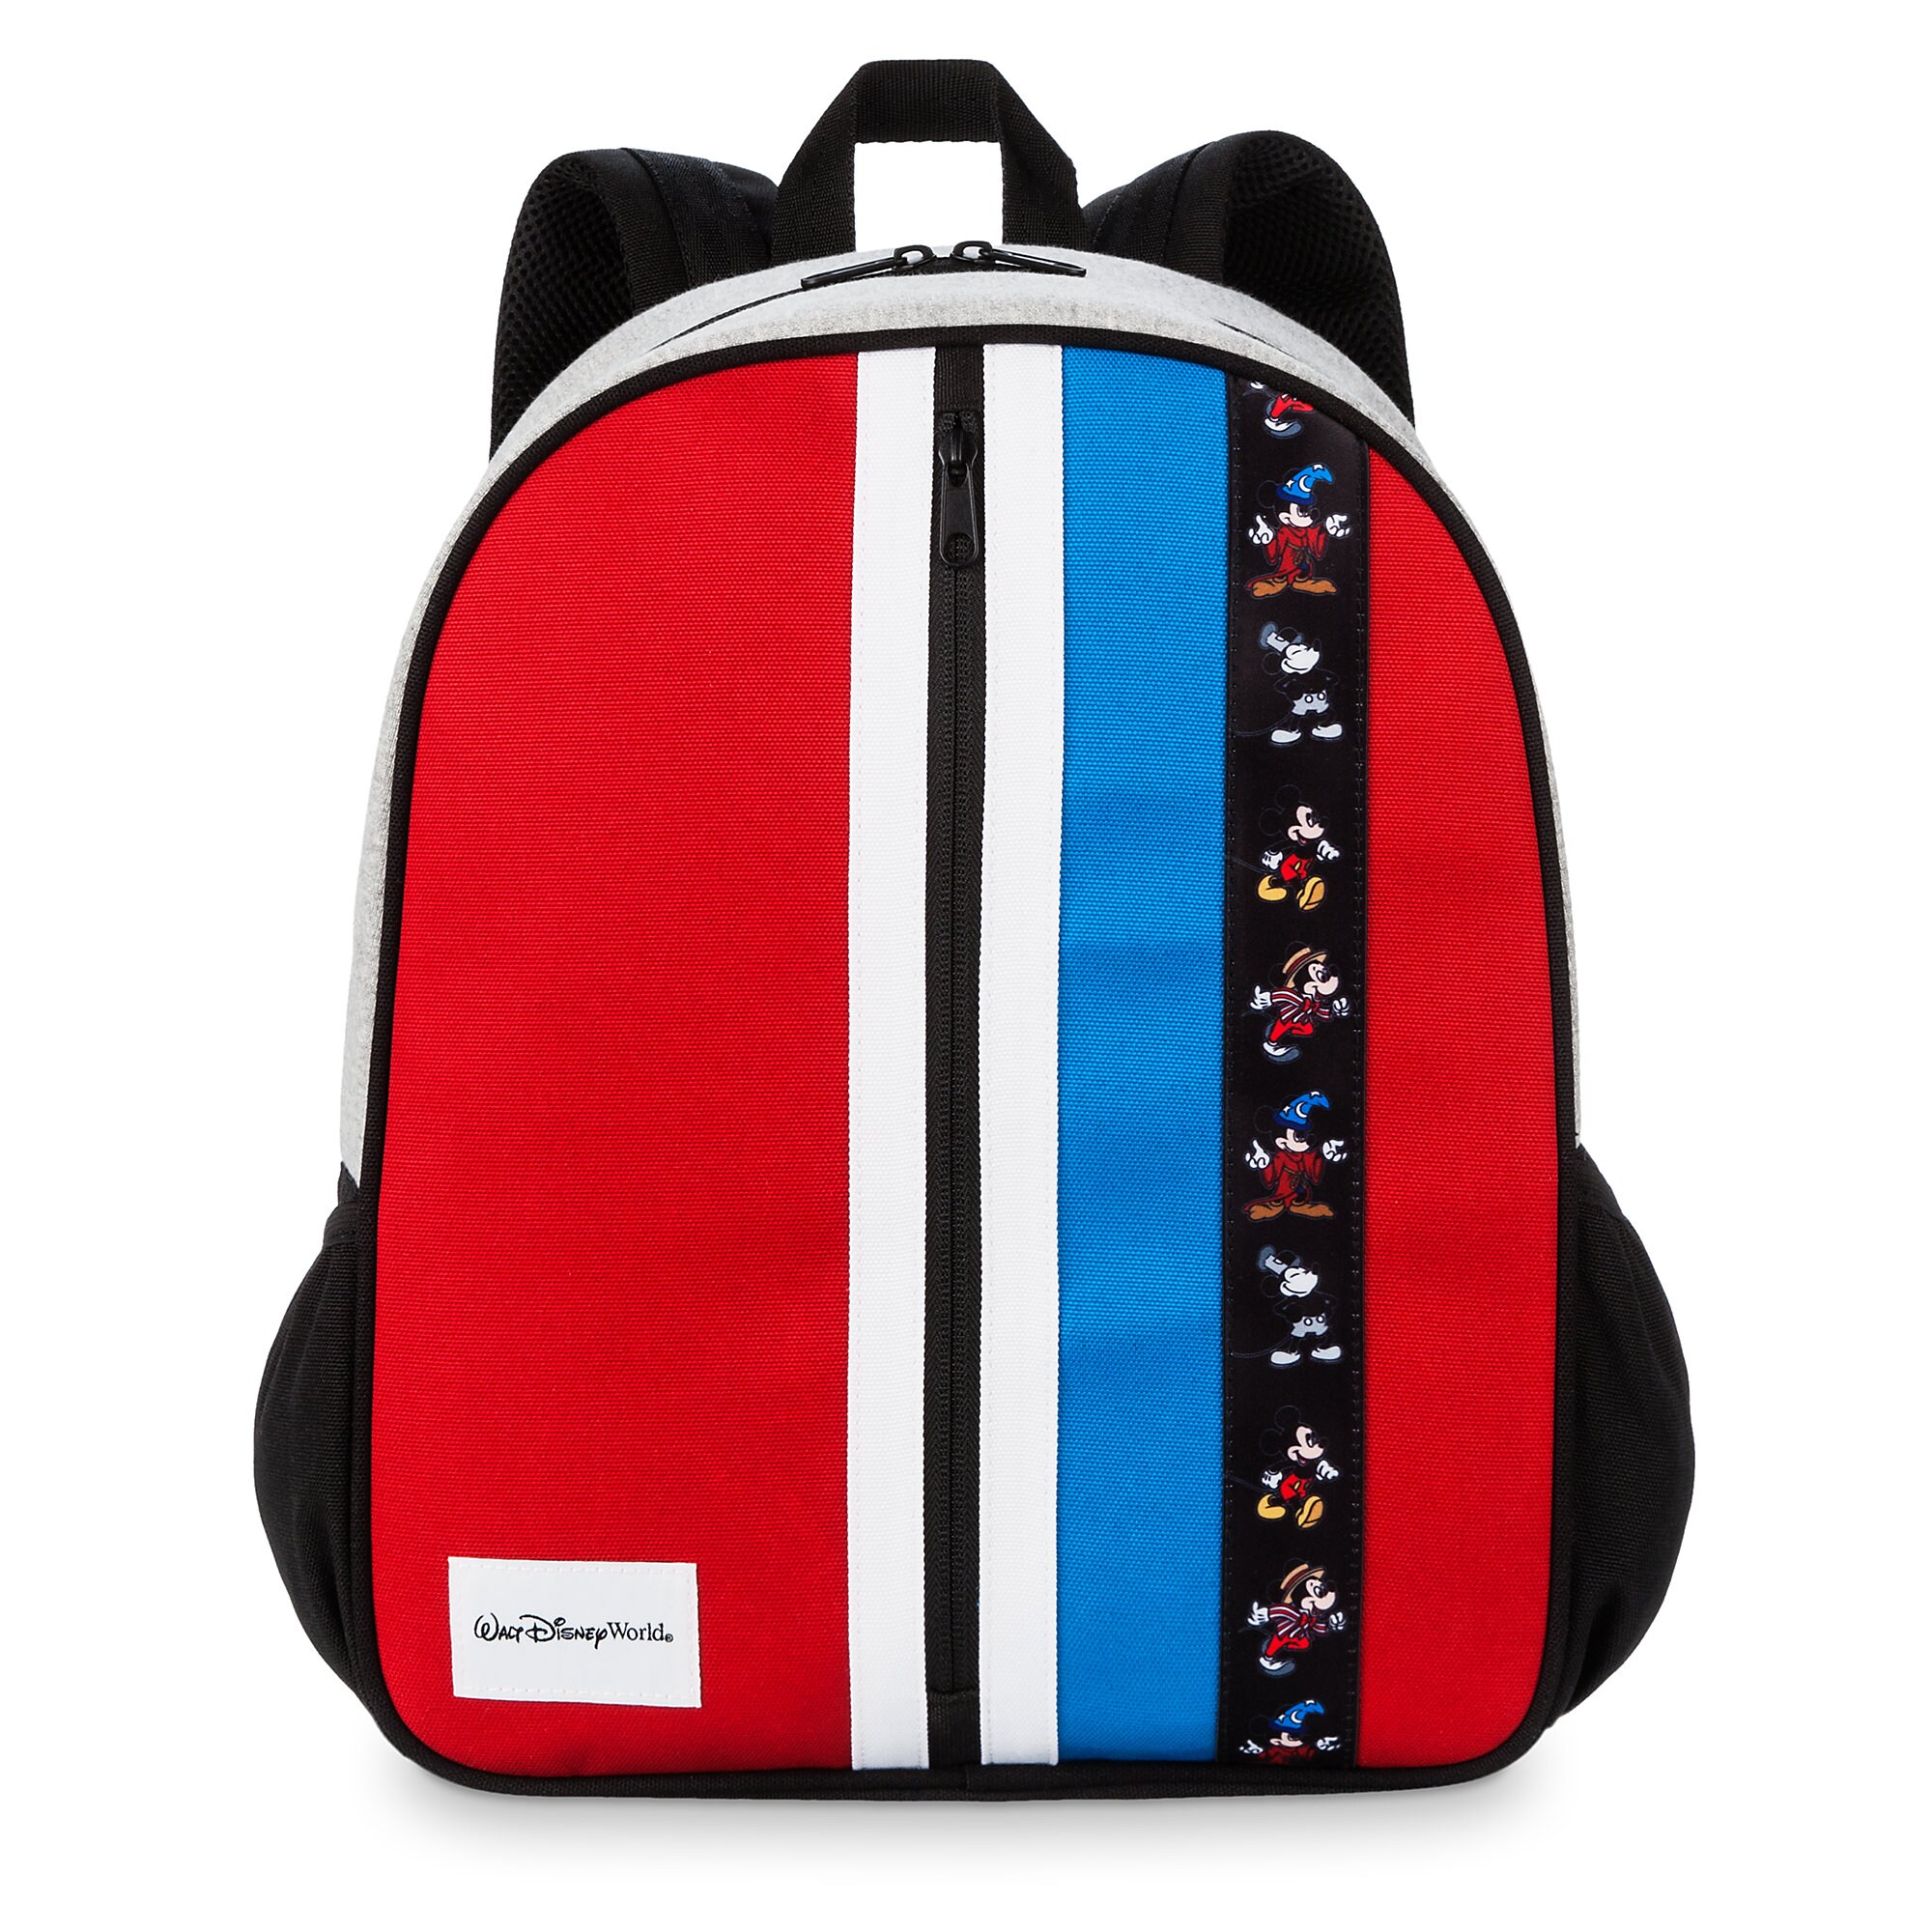 Mickey Mouse Backpack for Kids - Walt Disney World